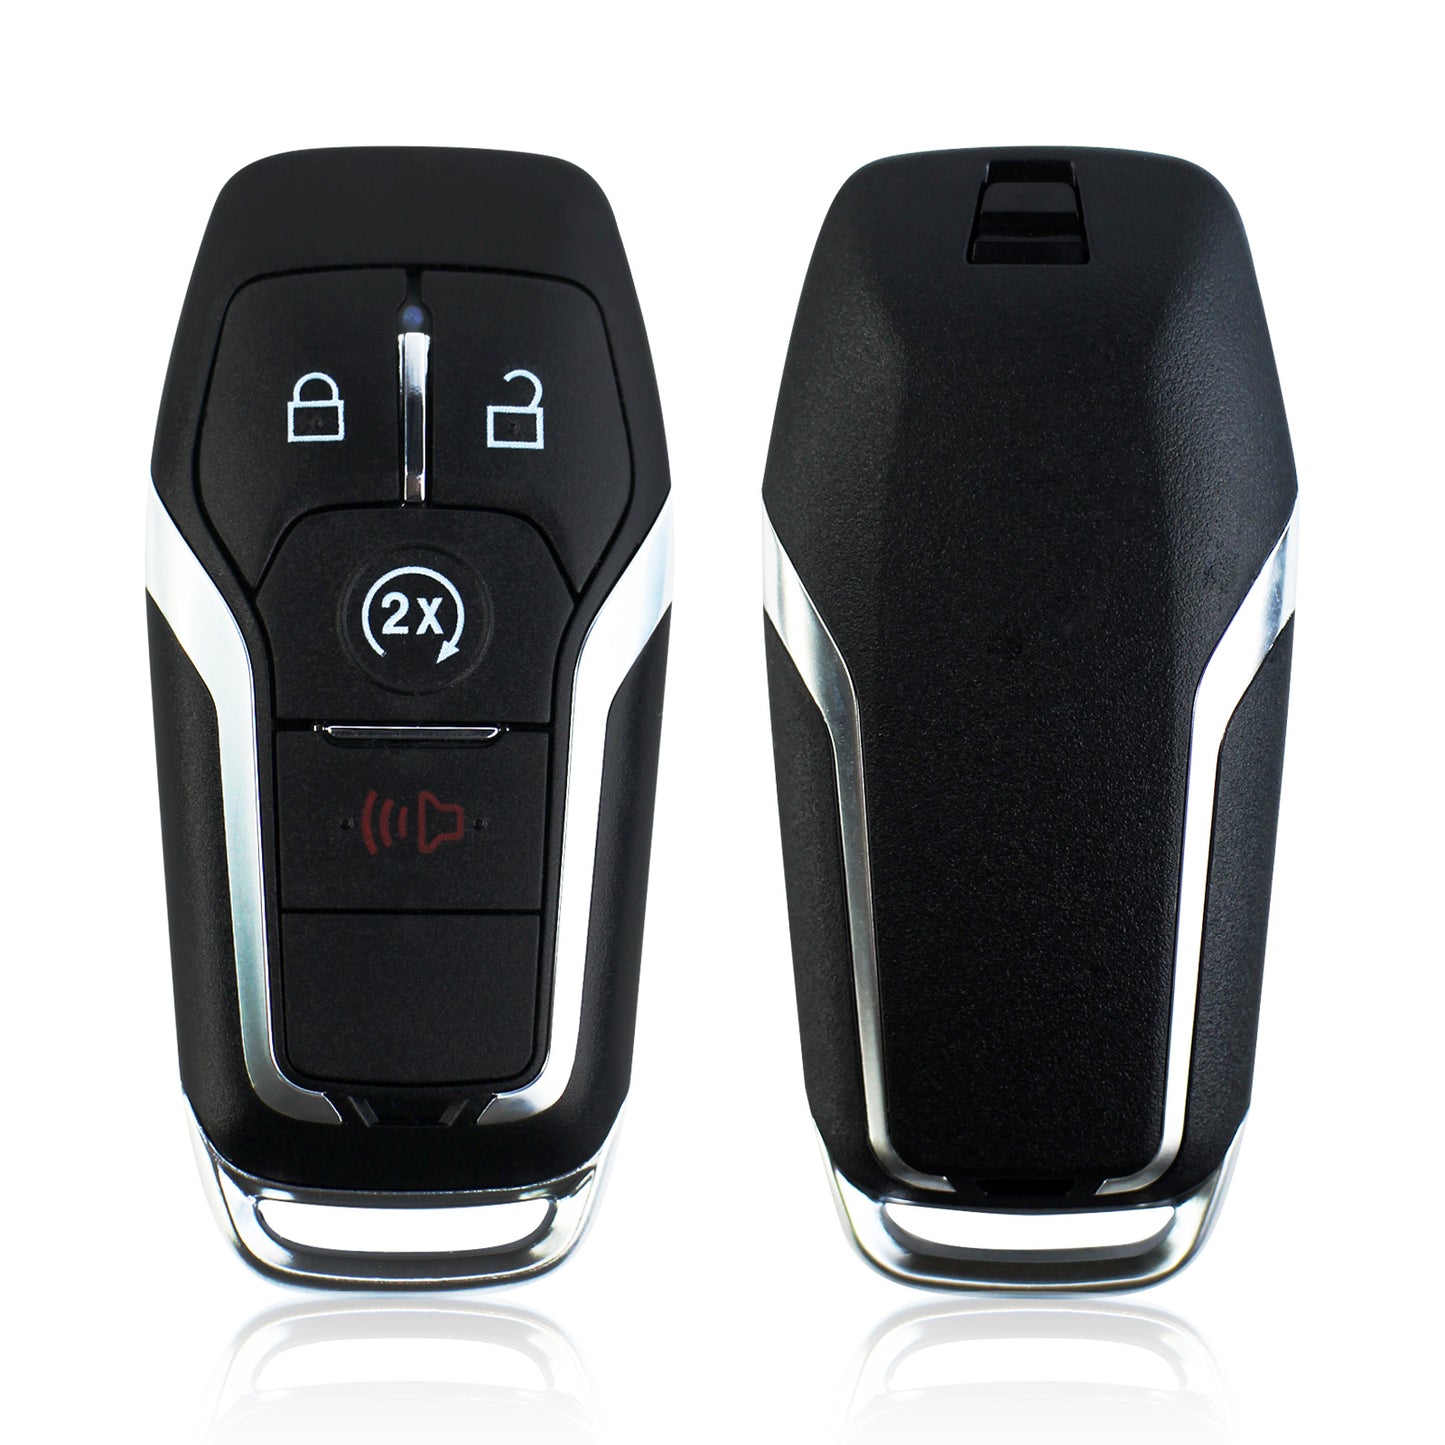 5 Buttons 902MHz Keyless Entry Fob Remote Car Key For 2016 - 2017 Ford Explorer FCC ID: M3N-A2C31243300 SKU : J970